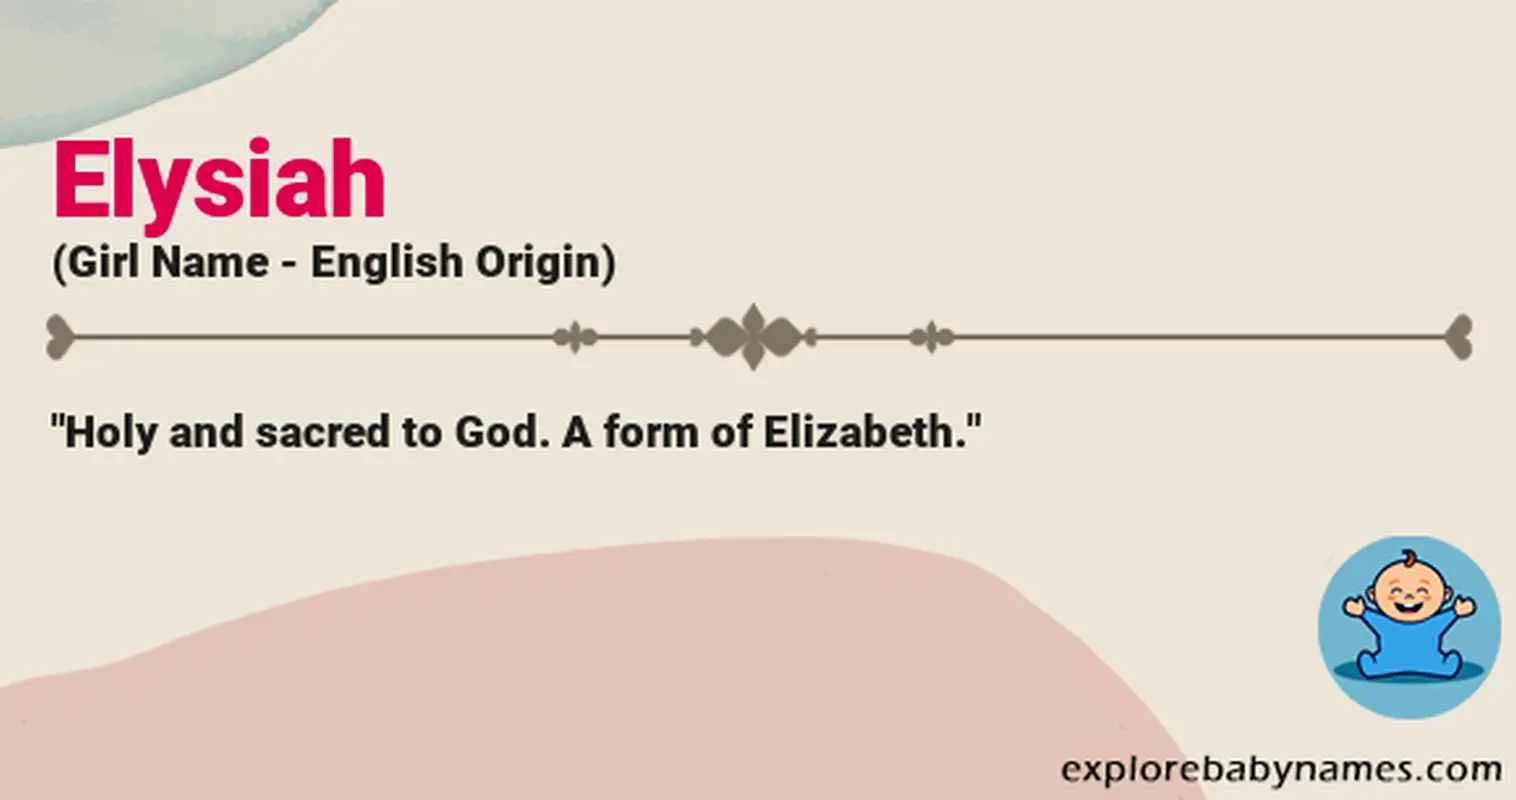 Meaning of Elysiah